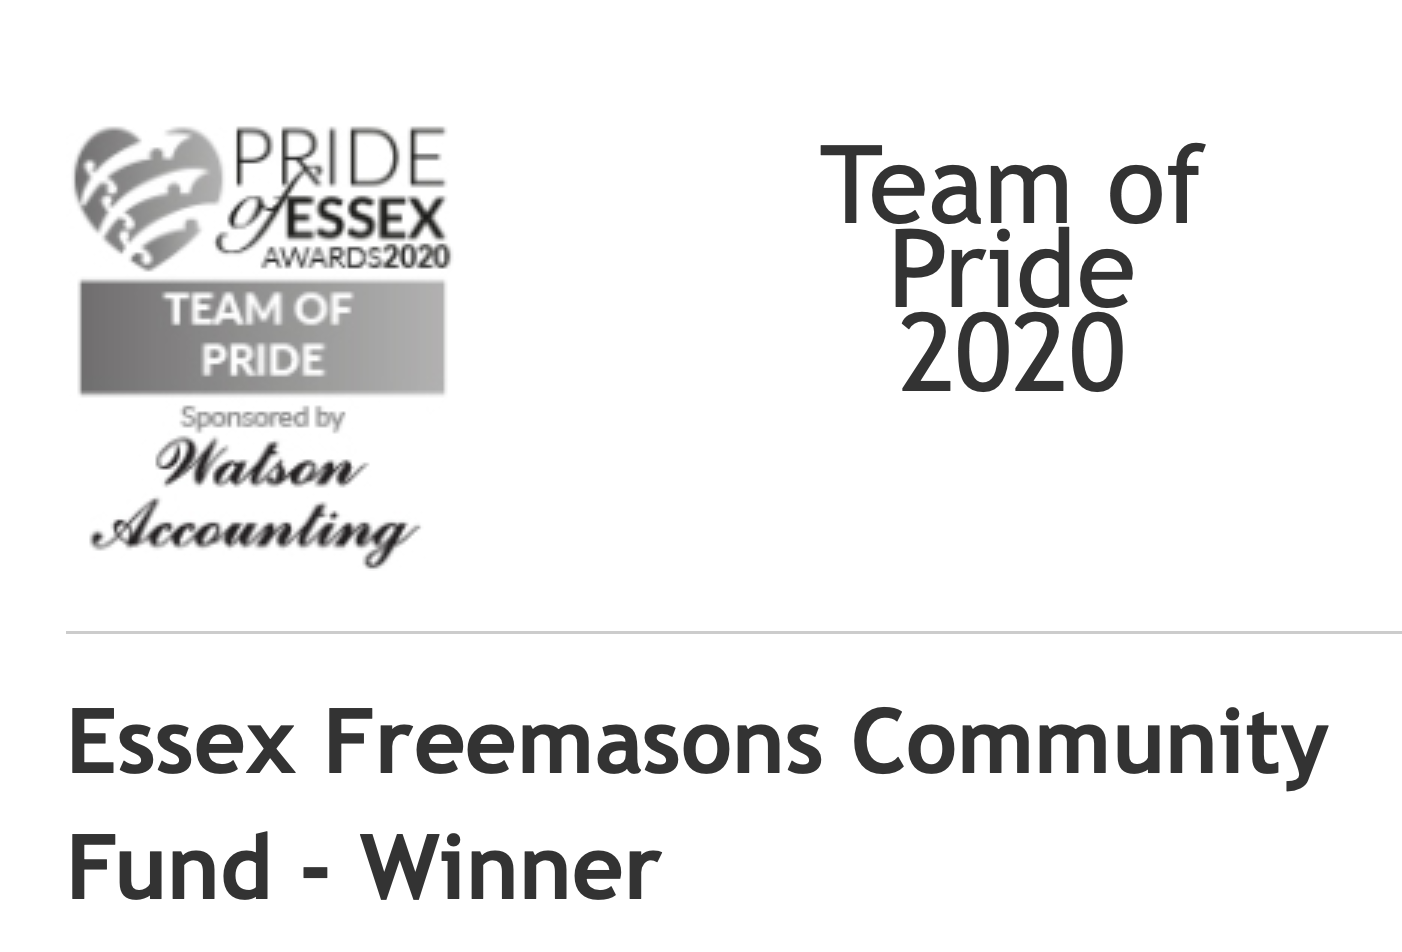 Freemasons are the Pride of Essex